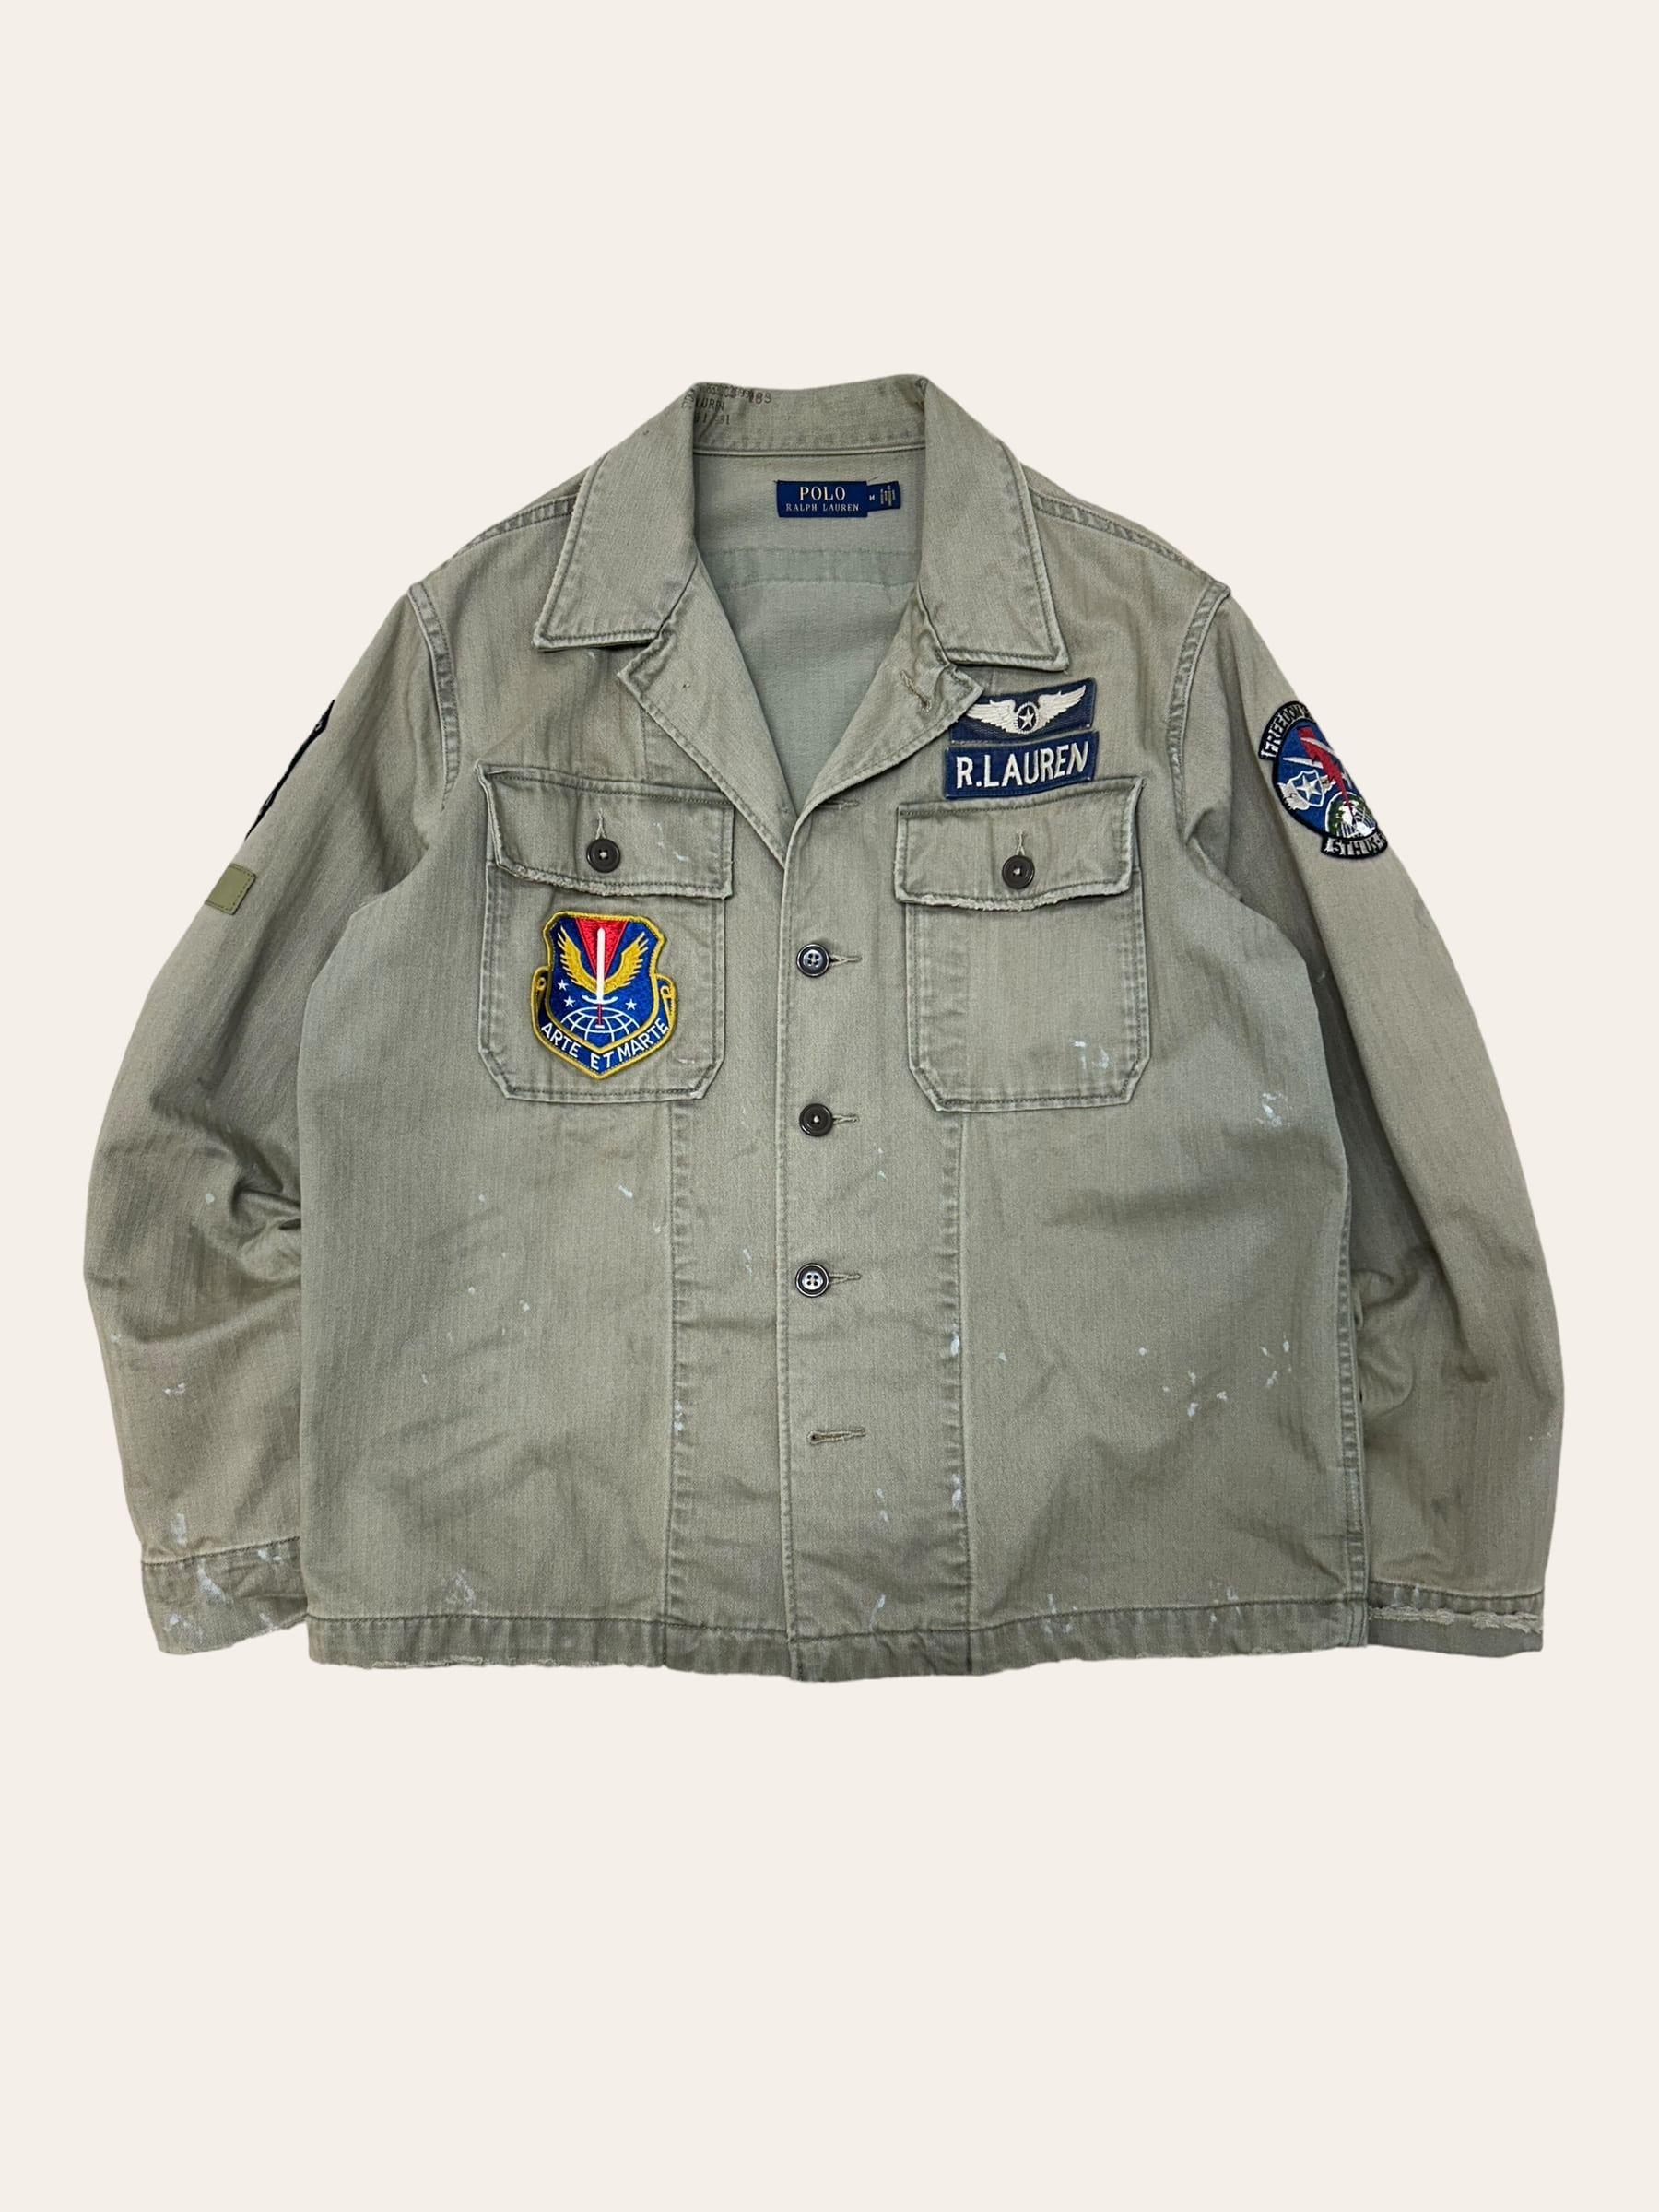 Polo ralph lauren military patched HBT shirt jacket M